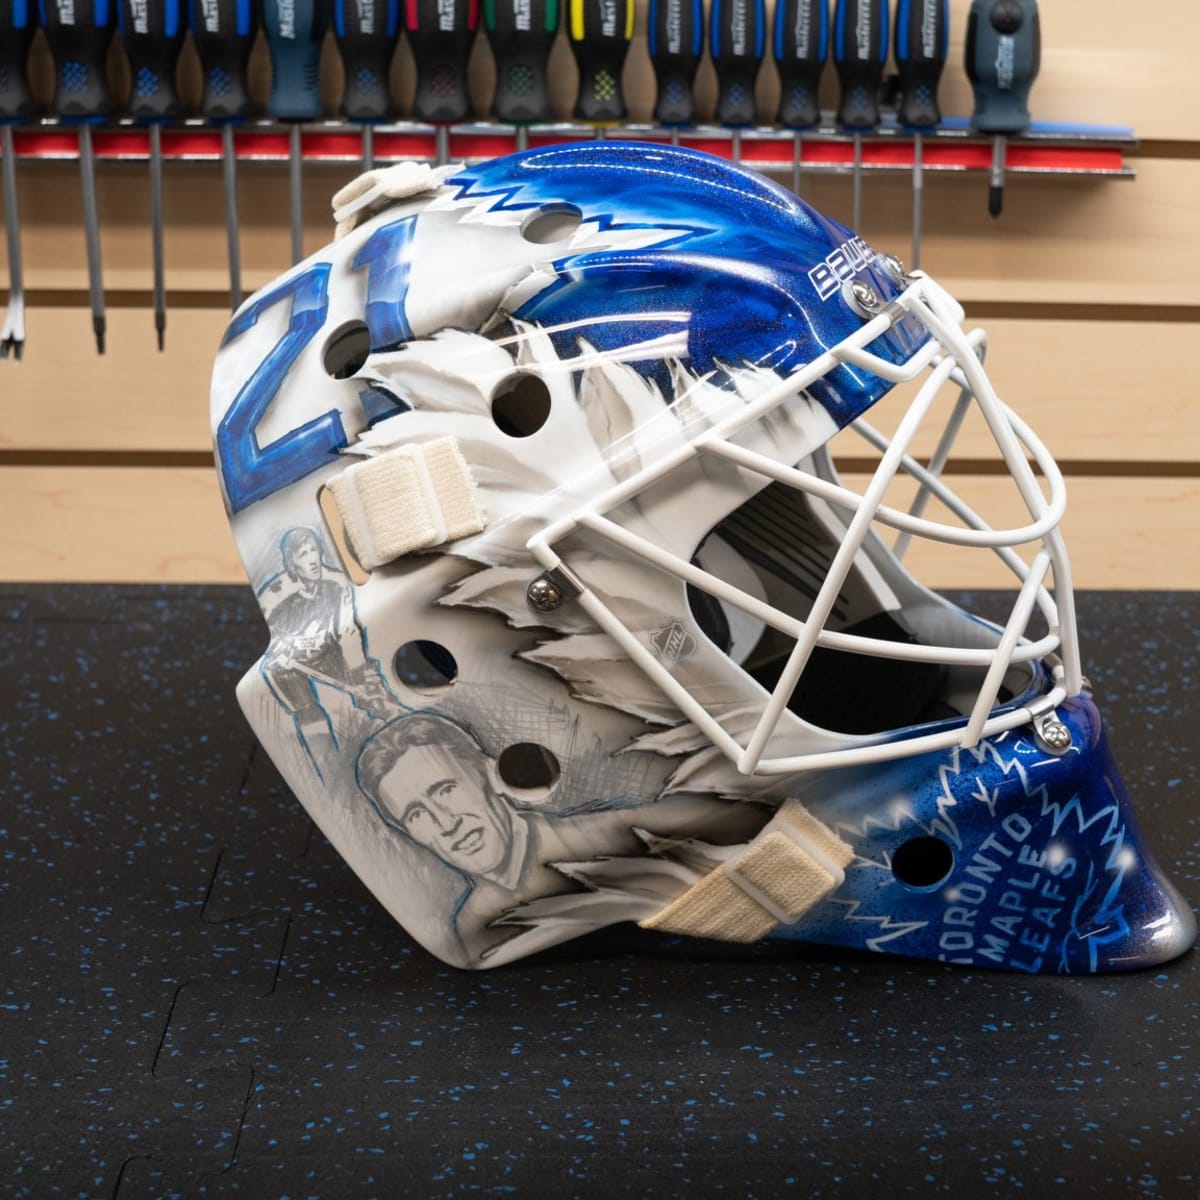 Toronto maple leafs goalie mask  Goalie mask, Goalie, Hockey goalie